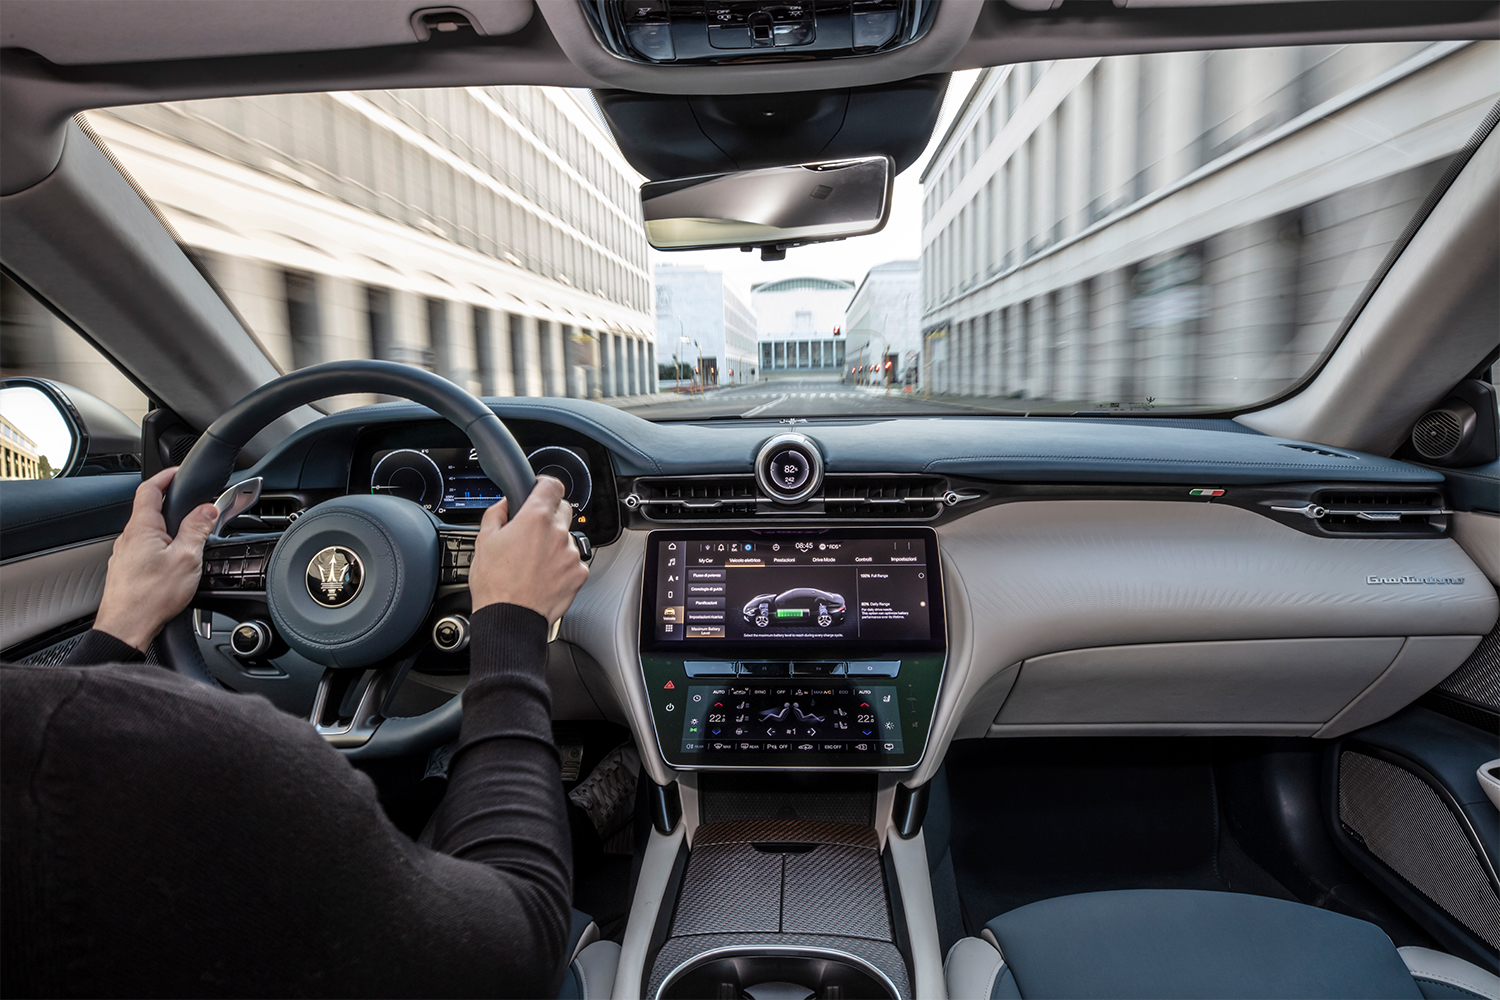 The dashboard and infotainment in the new electric Maserati GranTurismo